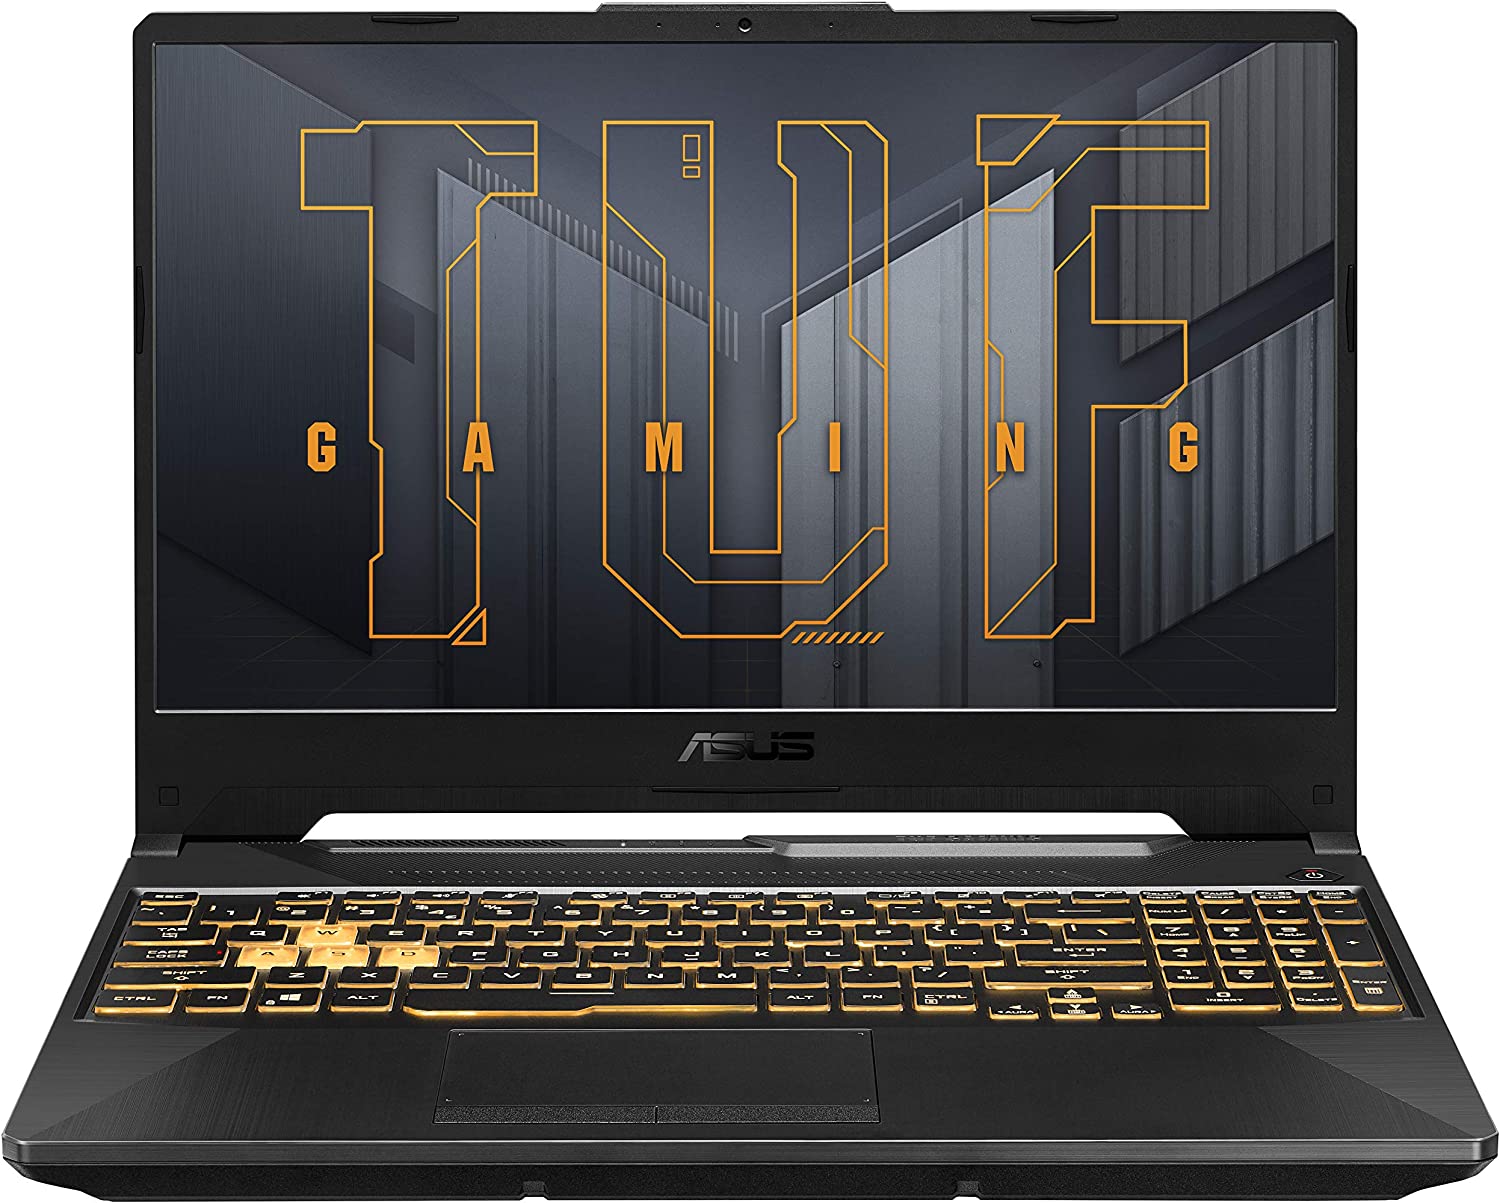 ASUS TUF Gaming F15 Gaming Laptop, 15.6” 144Hz FHD Display, Intel Core i5-11400H Processor, GeForce RTX 2050, 8GB DDR4 RAM, 512GB PCIe SSD Gen 3, Wi-Fi 6, Windows 11, FX506HF-ES51